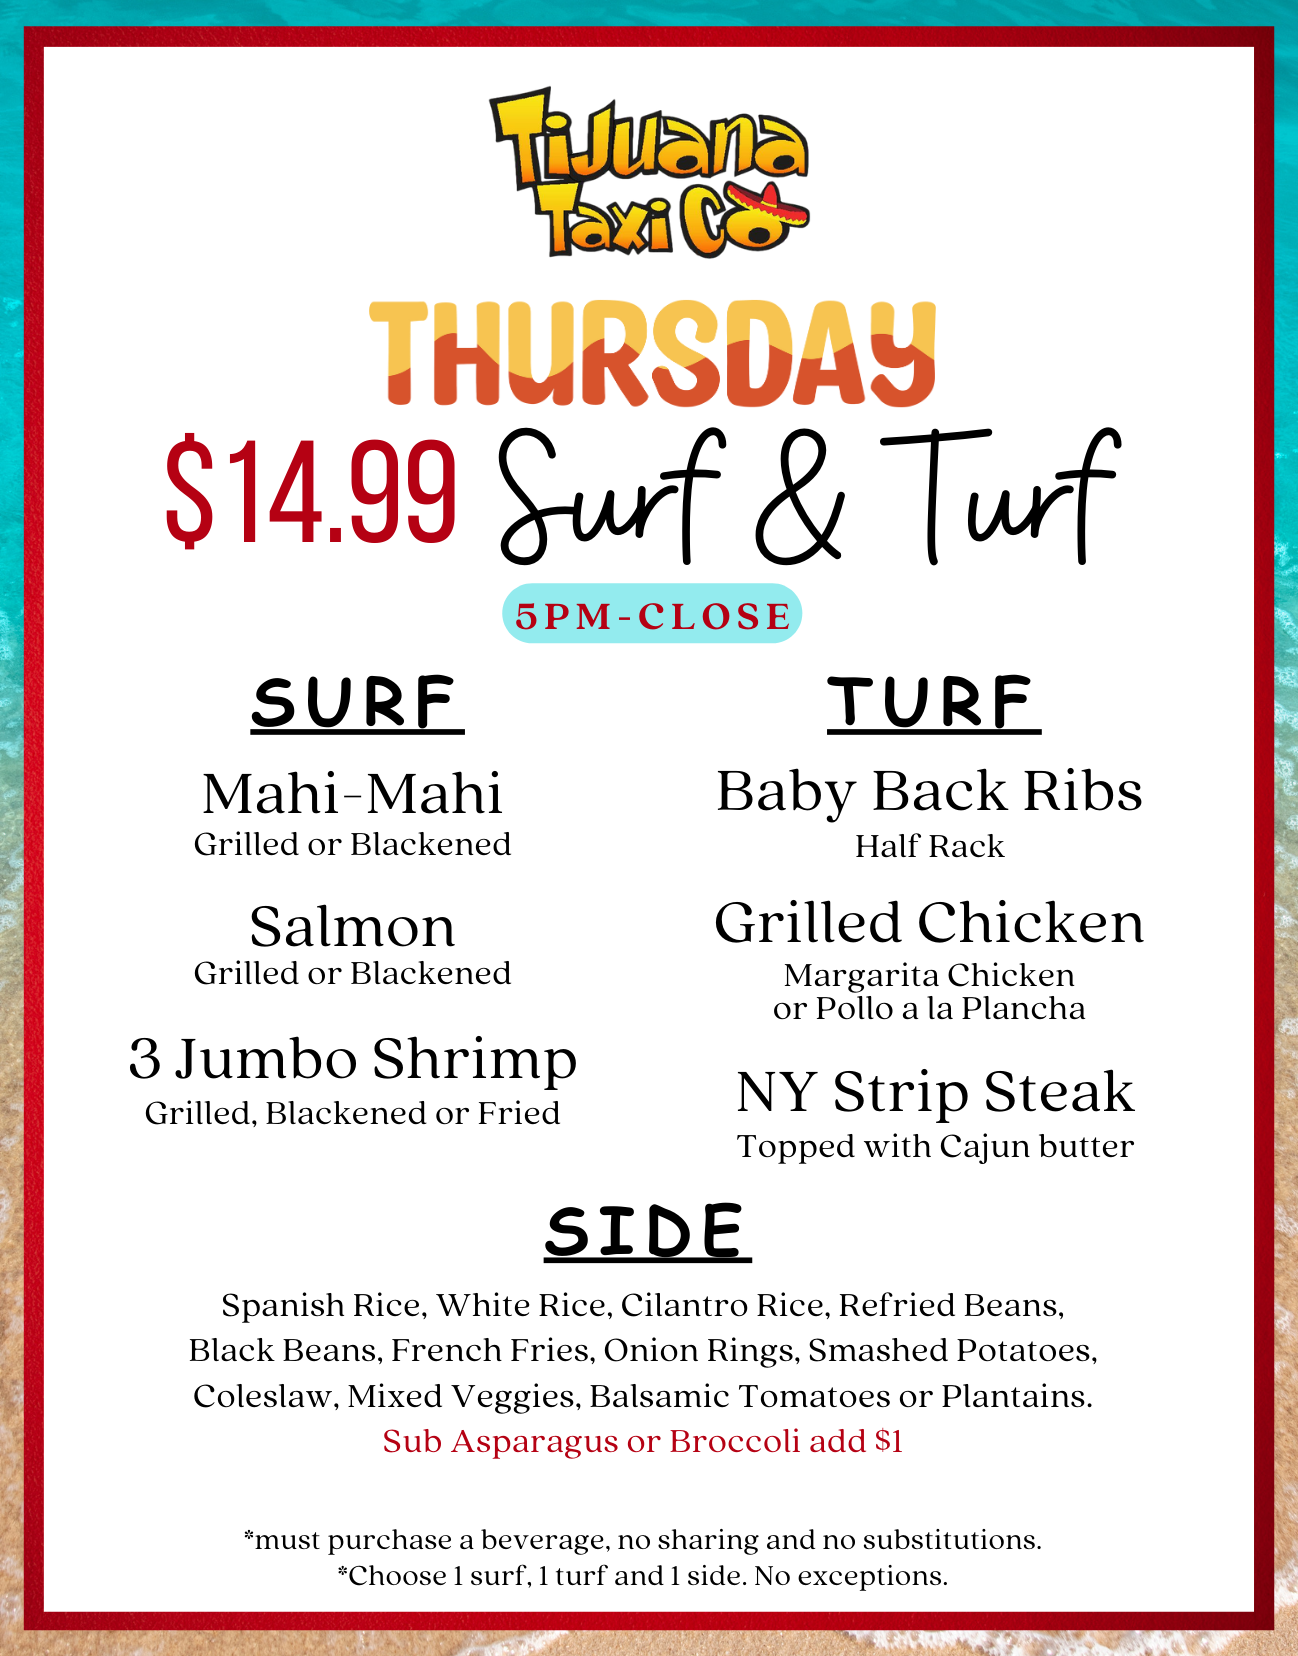 Surf & Turf, Tijuana Taxi, Thursday Special